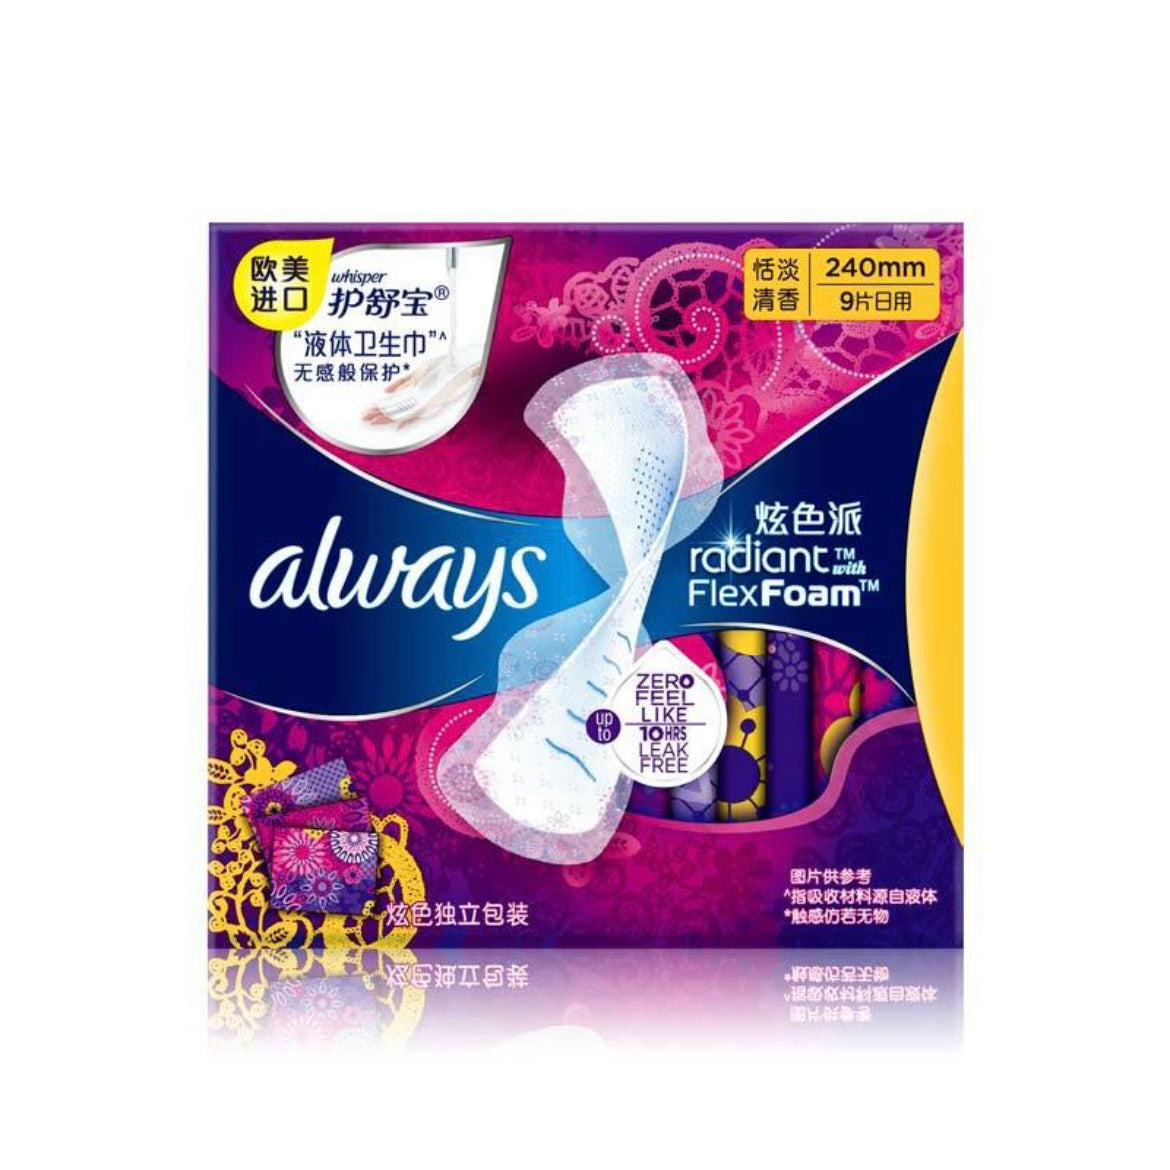 Whisper Always Infinity Fragrant Anti-Bacteria Liquid Sanitary Pad (Da